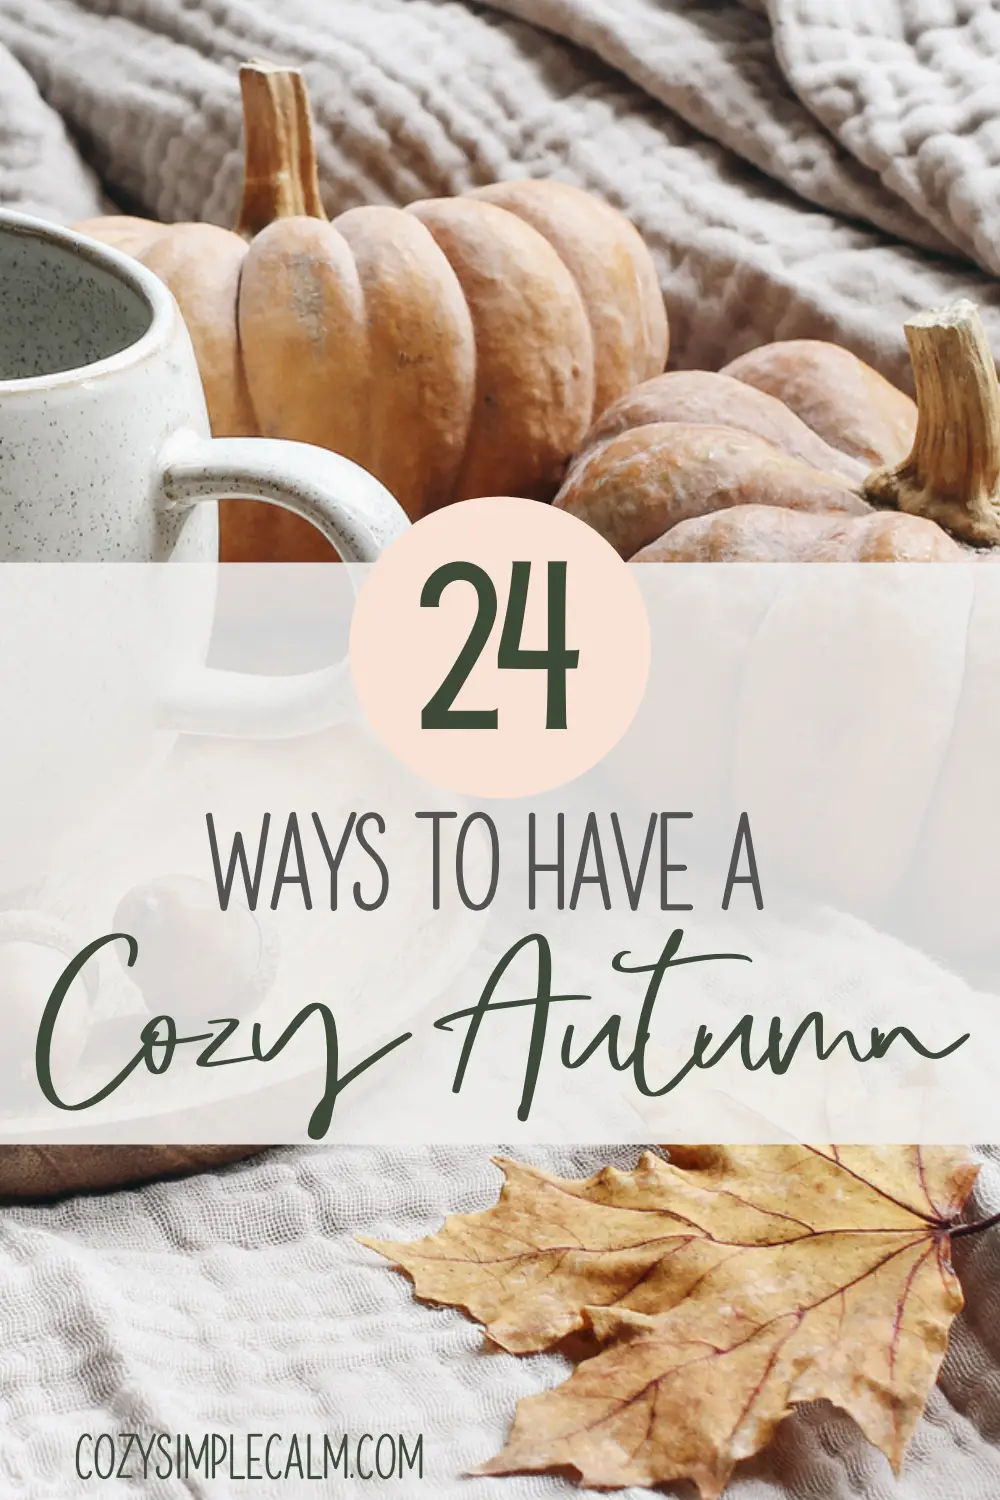 24 ways to have a cozy autumn - Cozy. Simple. Calm.